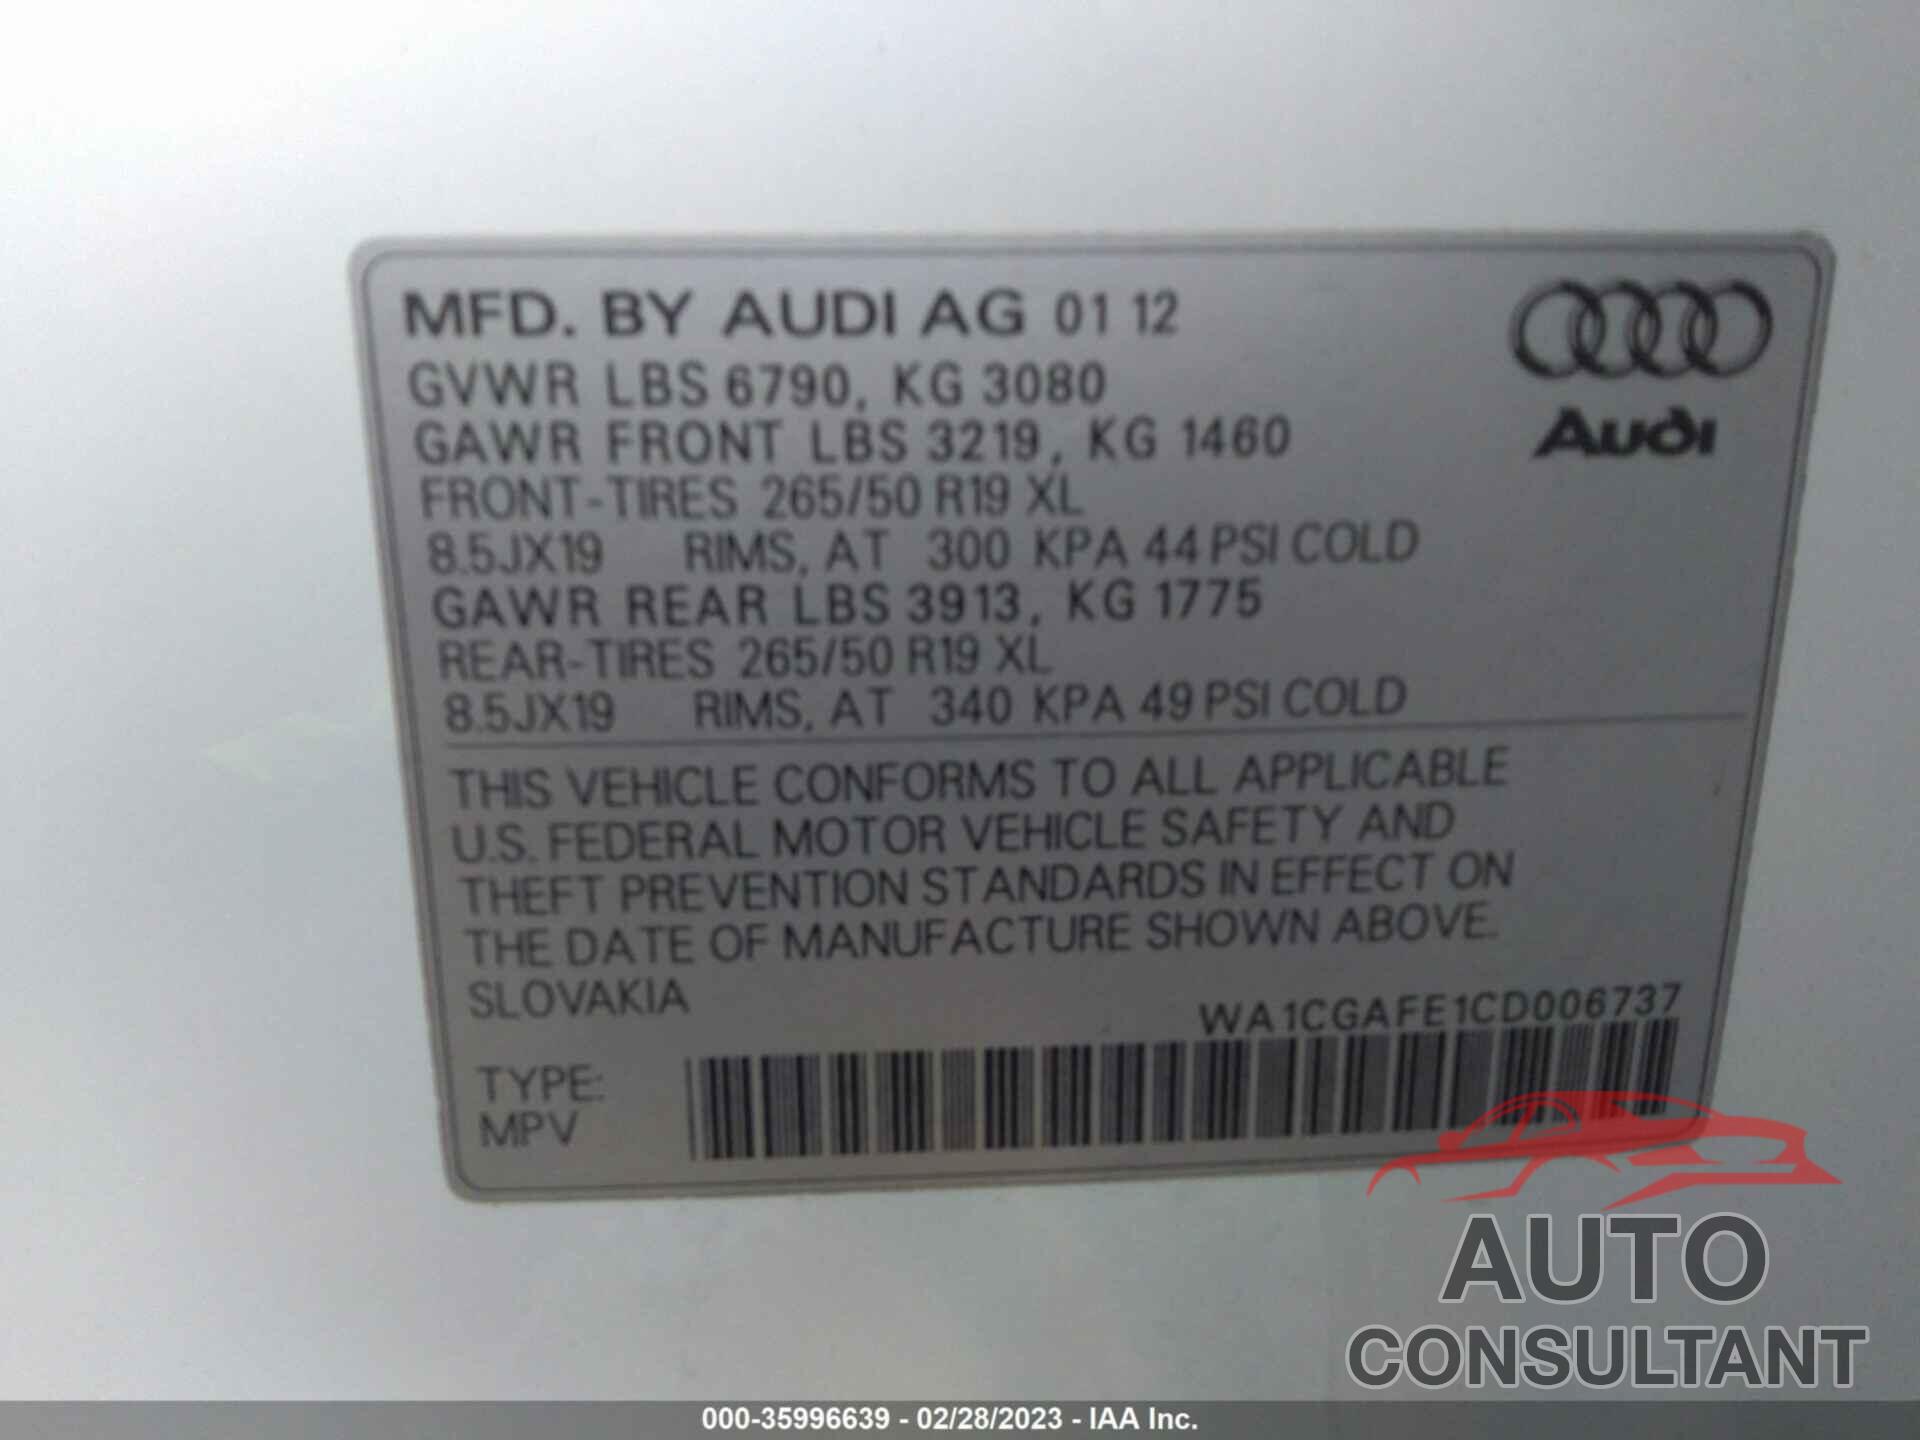 AUDI Q7 2012 - WA1CGAFE1CD006737